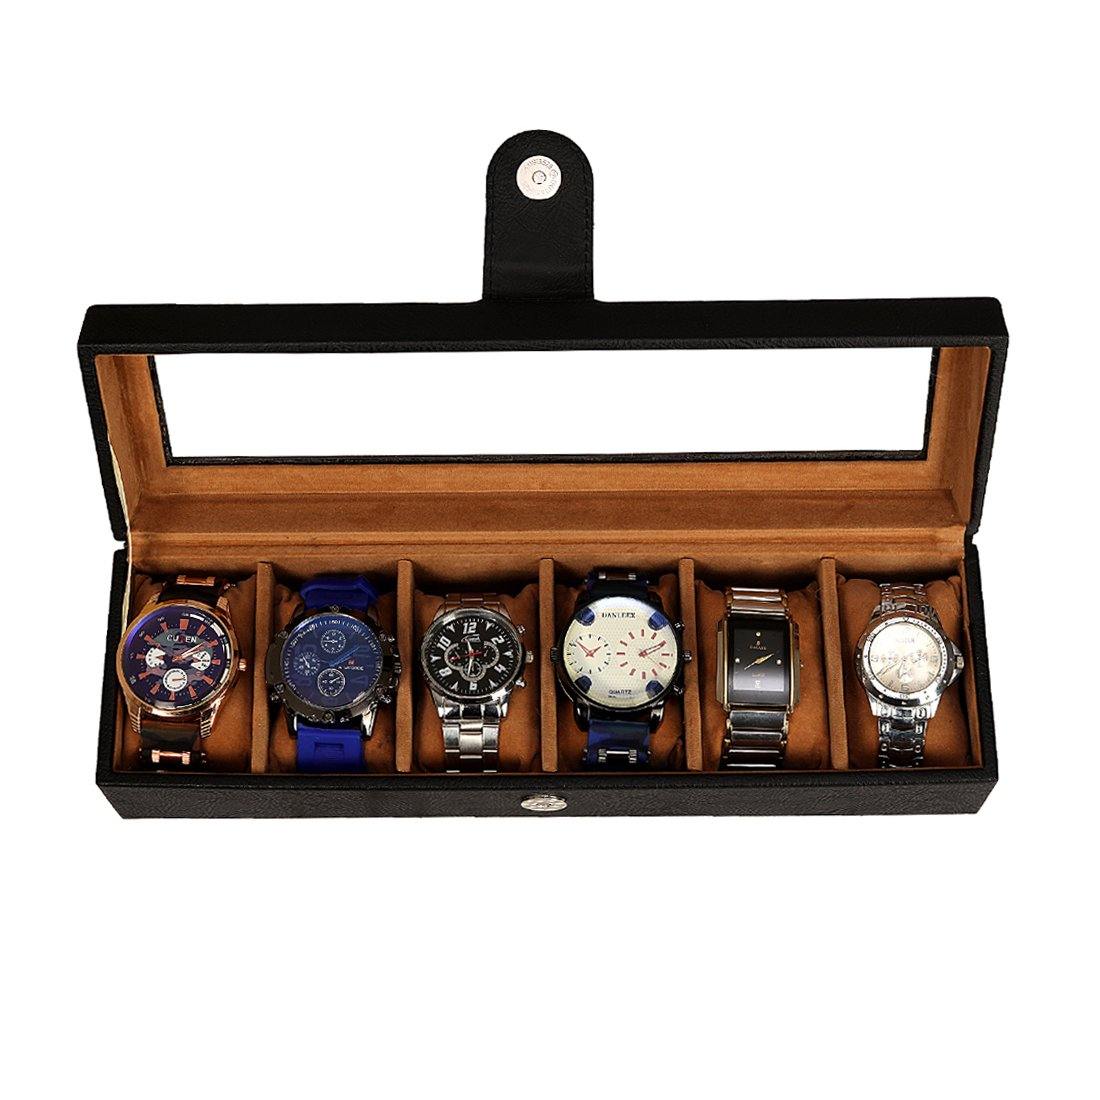 6 Slots Classy Watch Box Organizer with Viewing Window